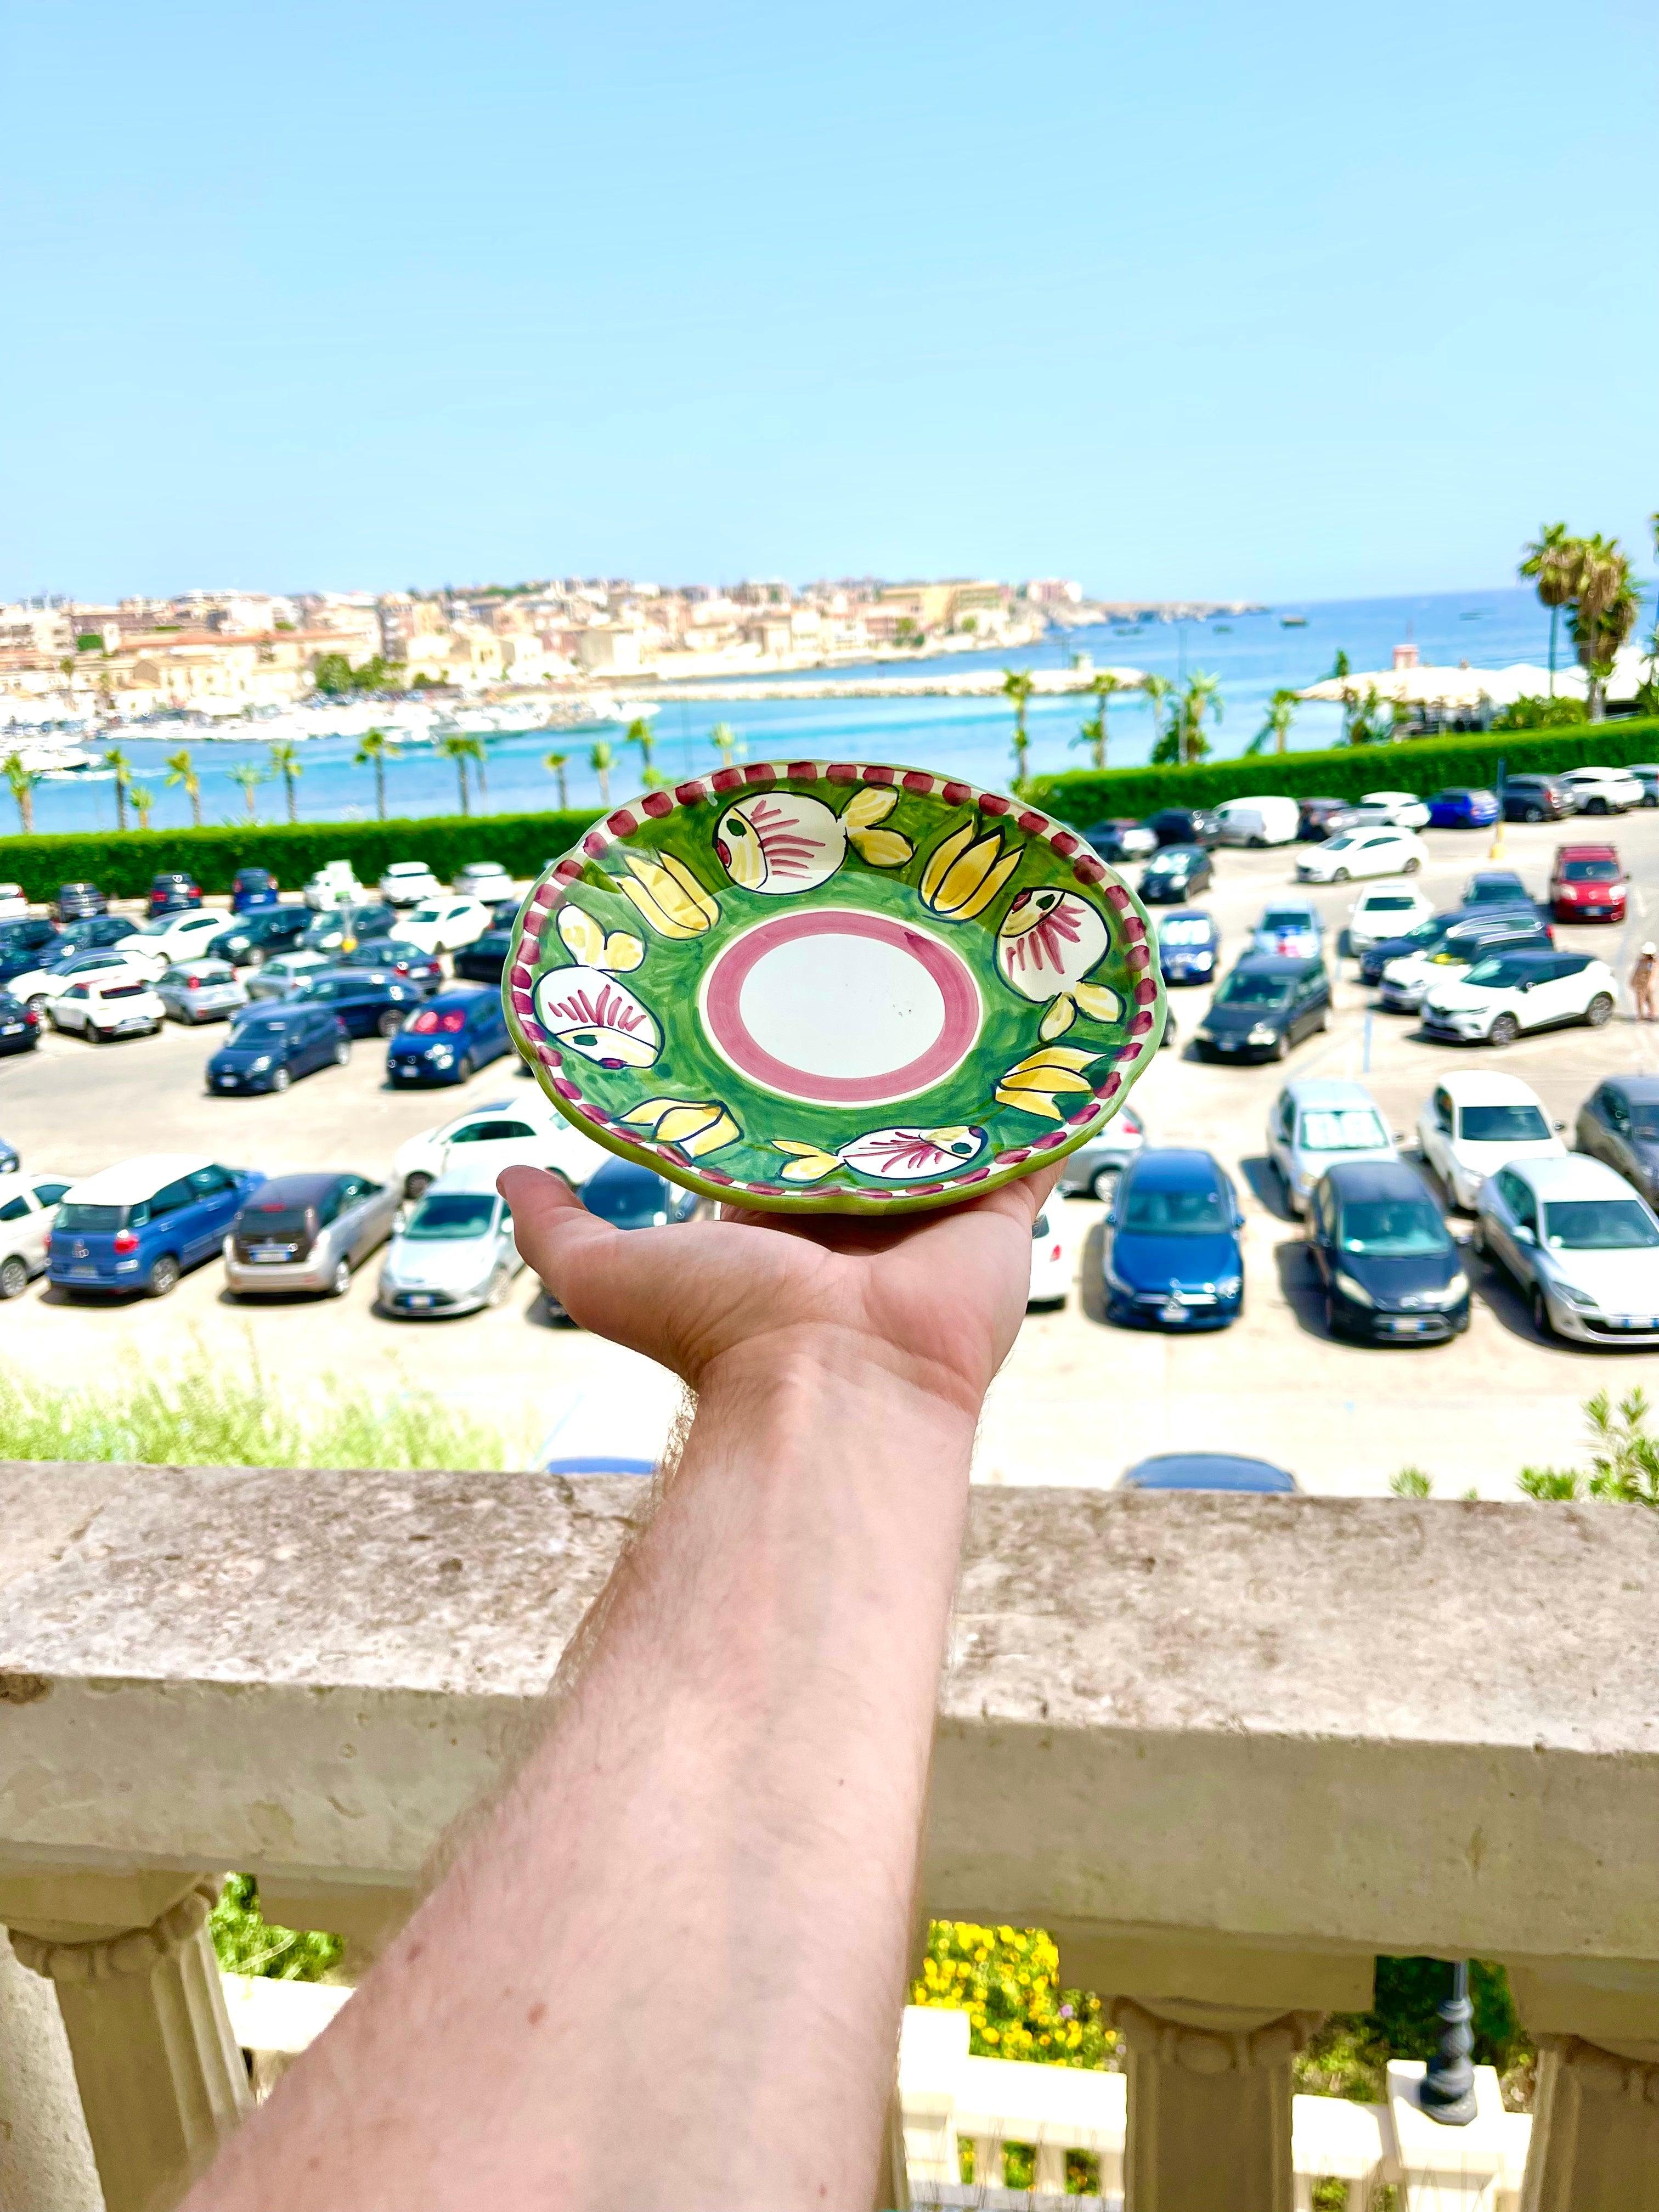 Amalfi Green Side Plate - THEHOUSEFUL